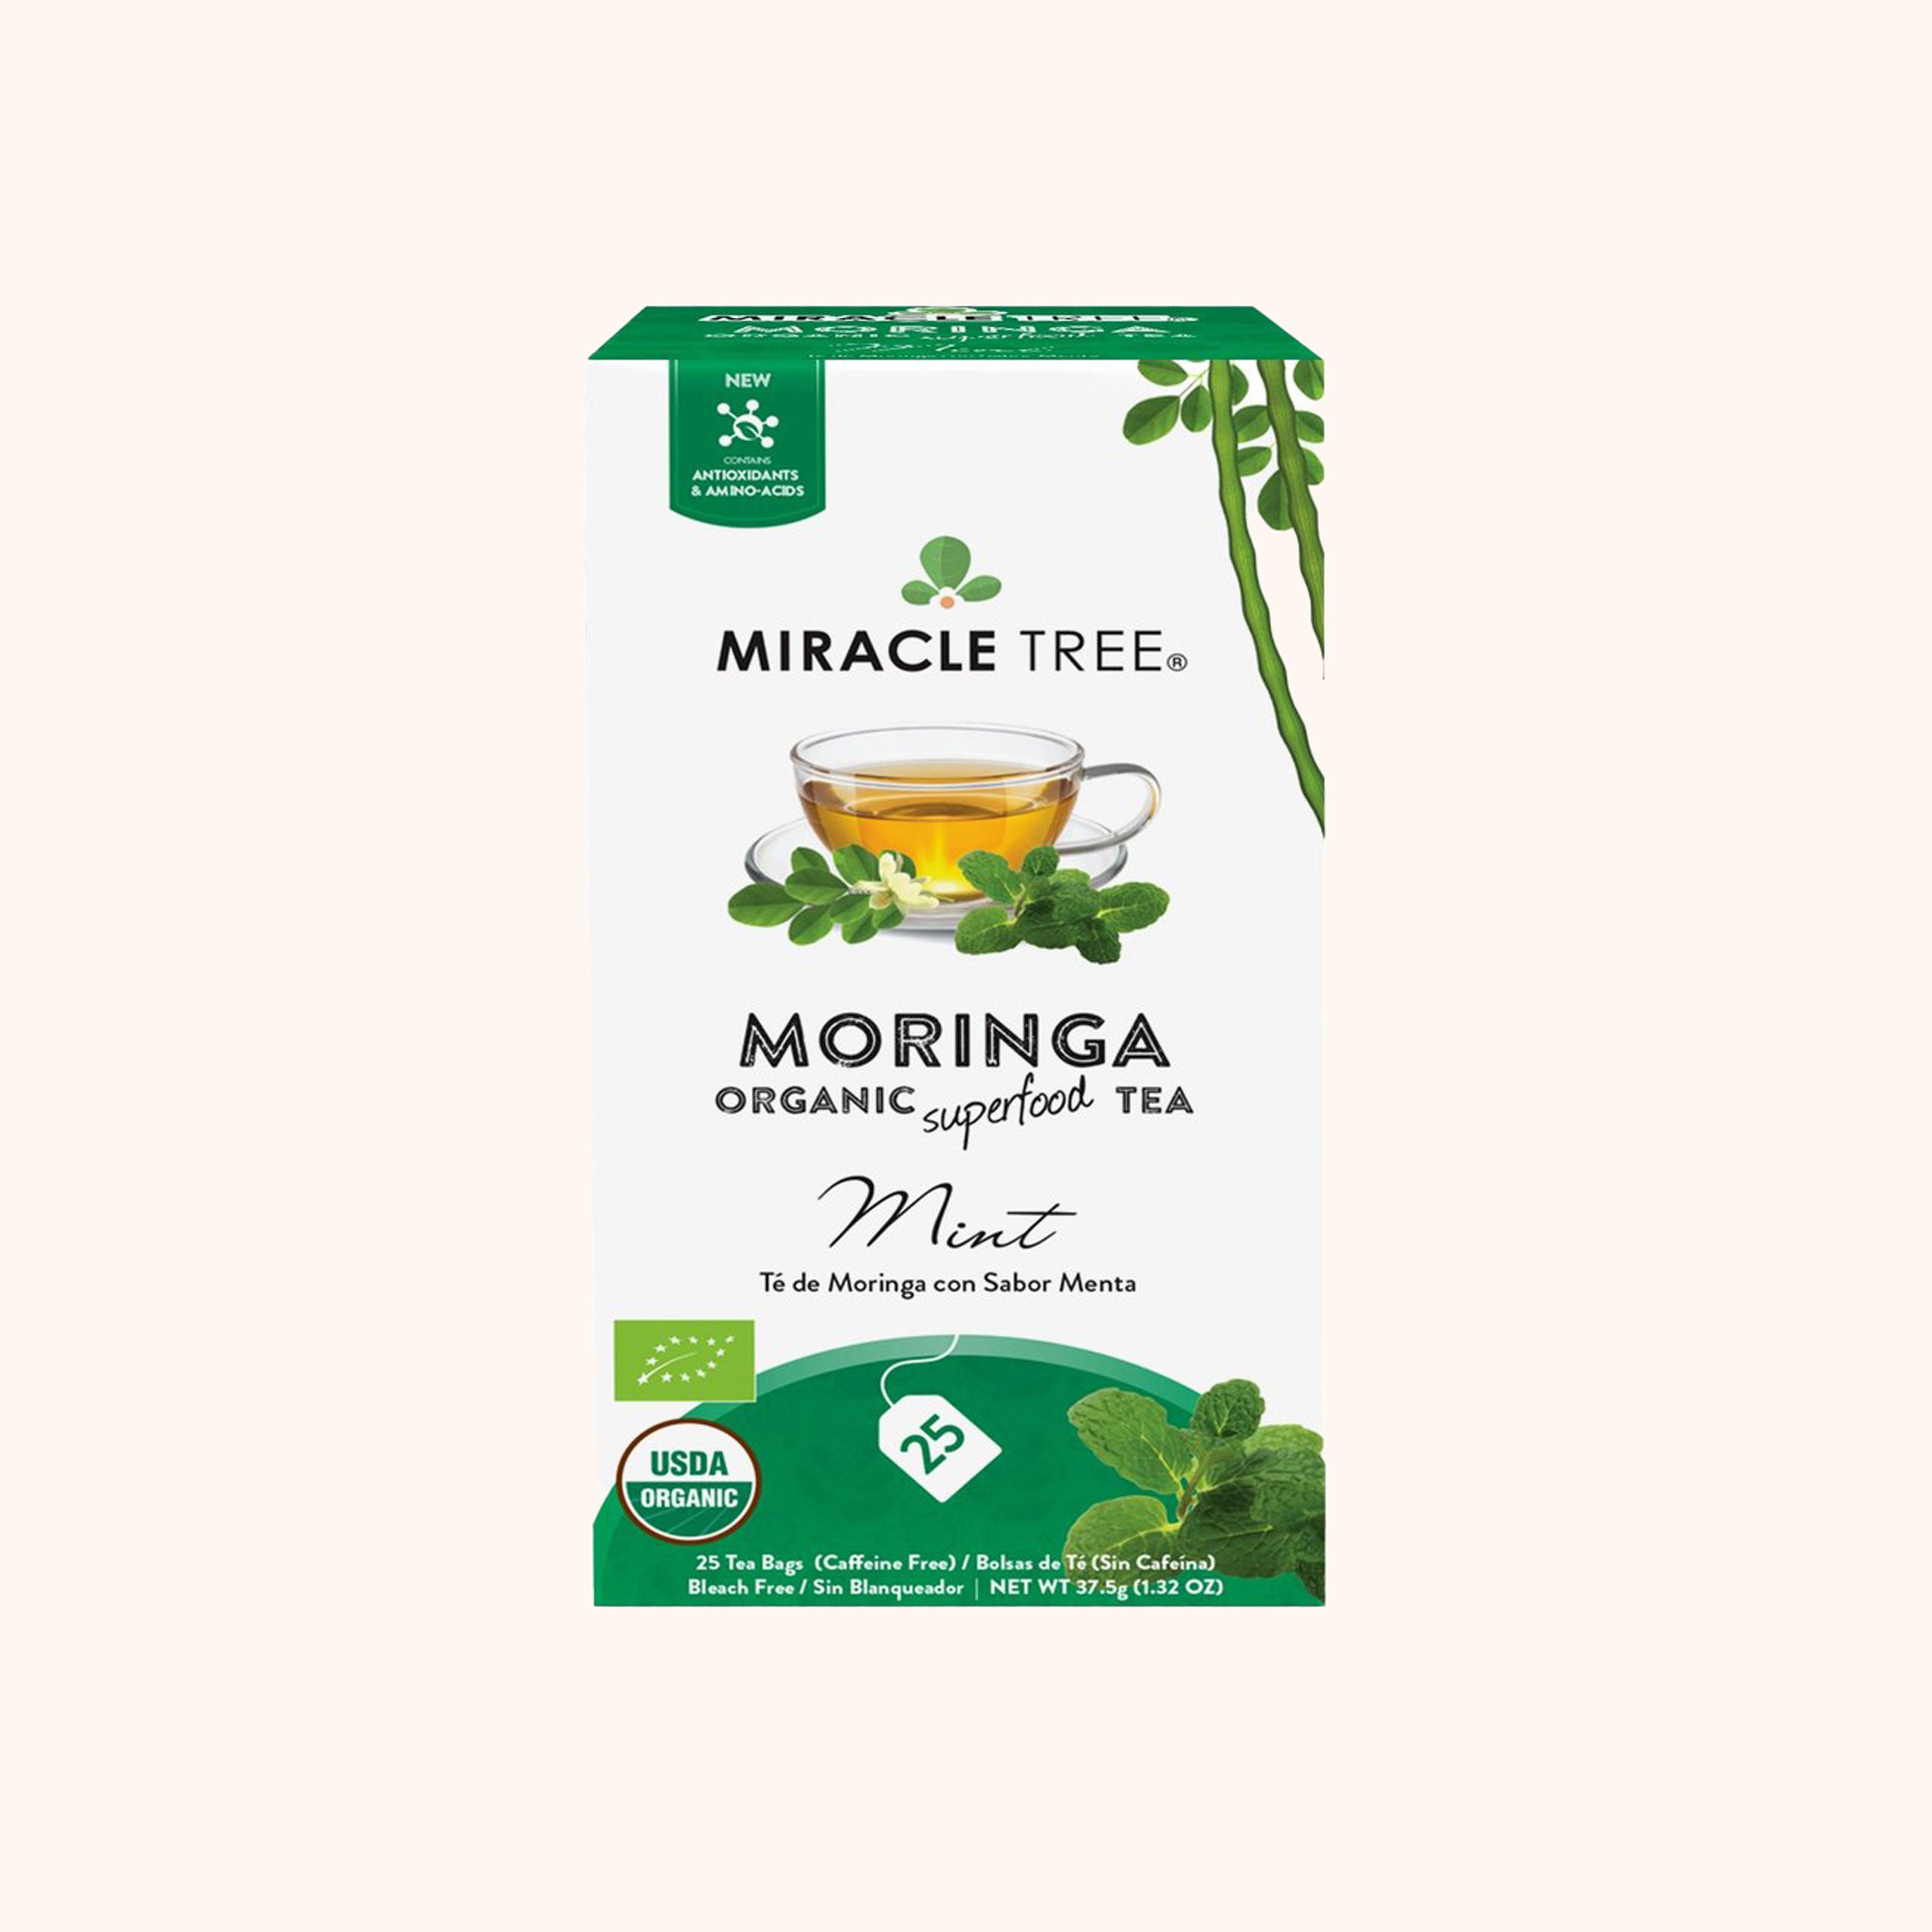 Organic Moringa Herbal Tea - Mint